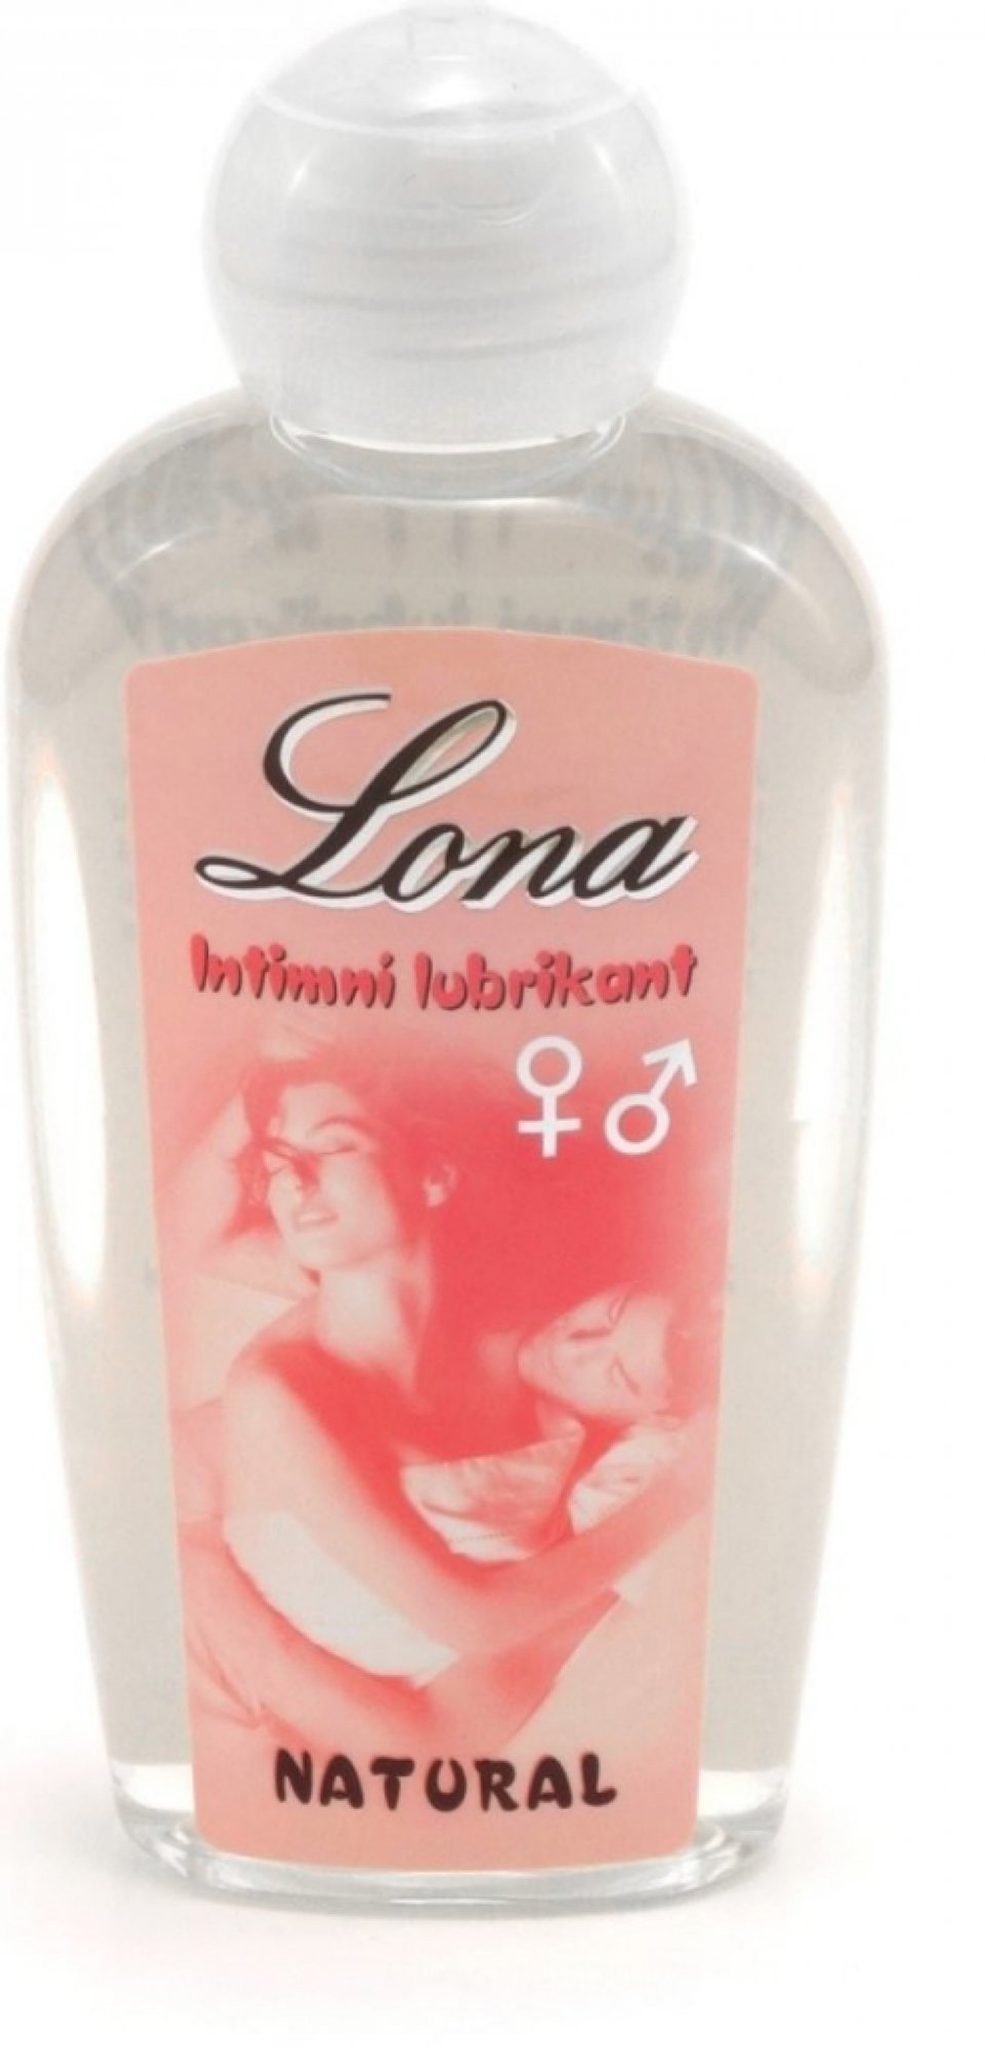 Lona Natural lubrikační gel 130ml